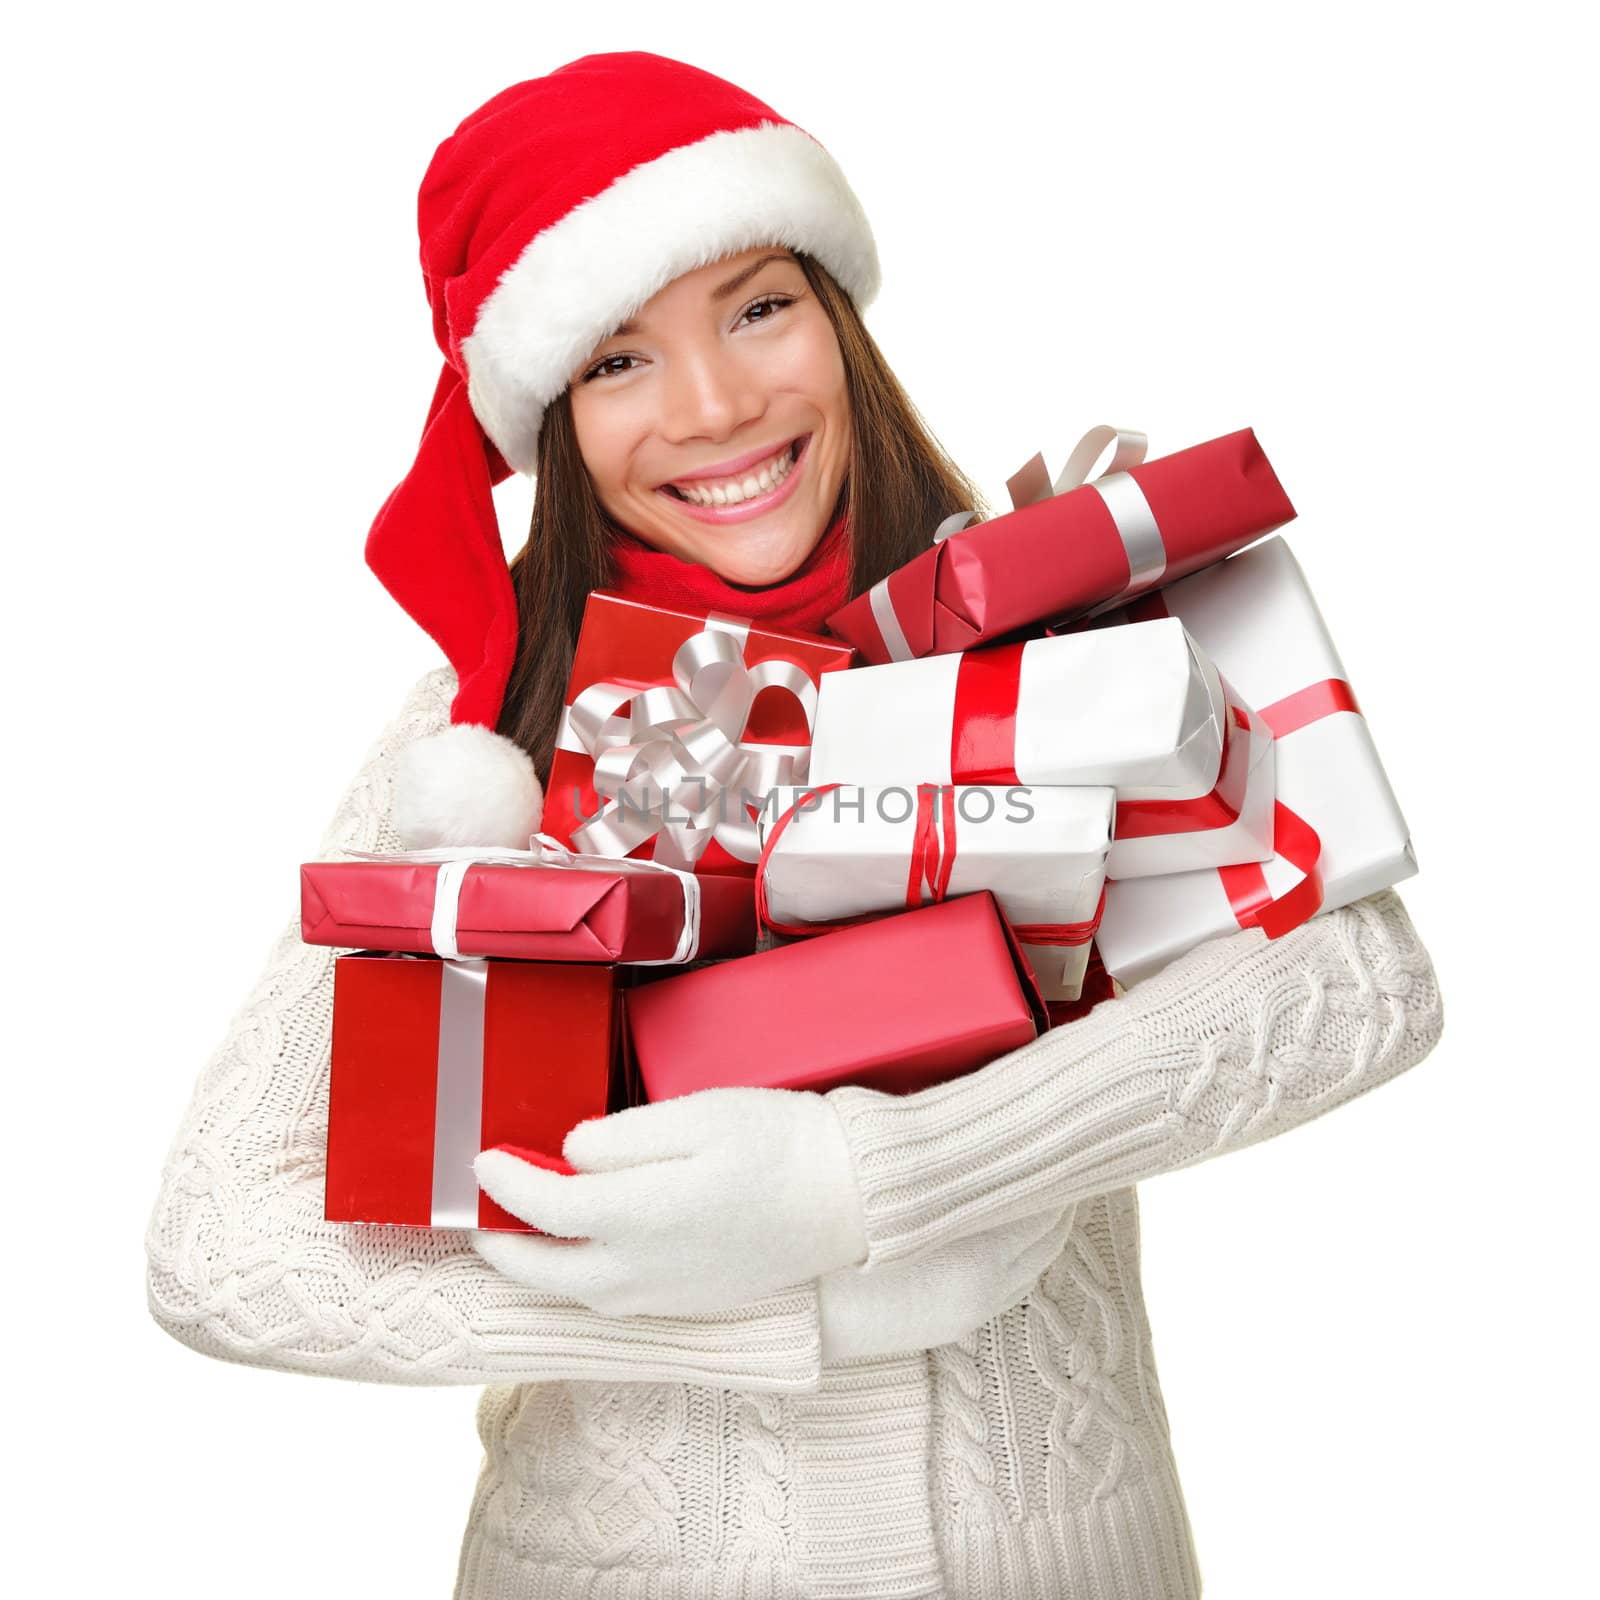 Christmas shopping woman holding gifts by Maridav